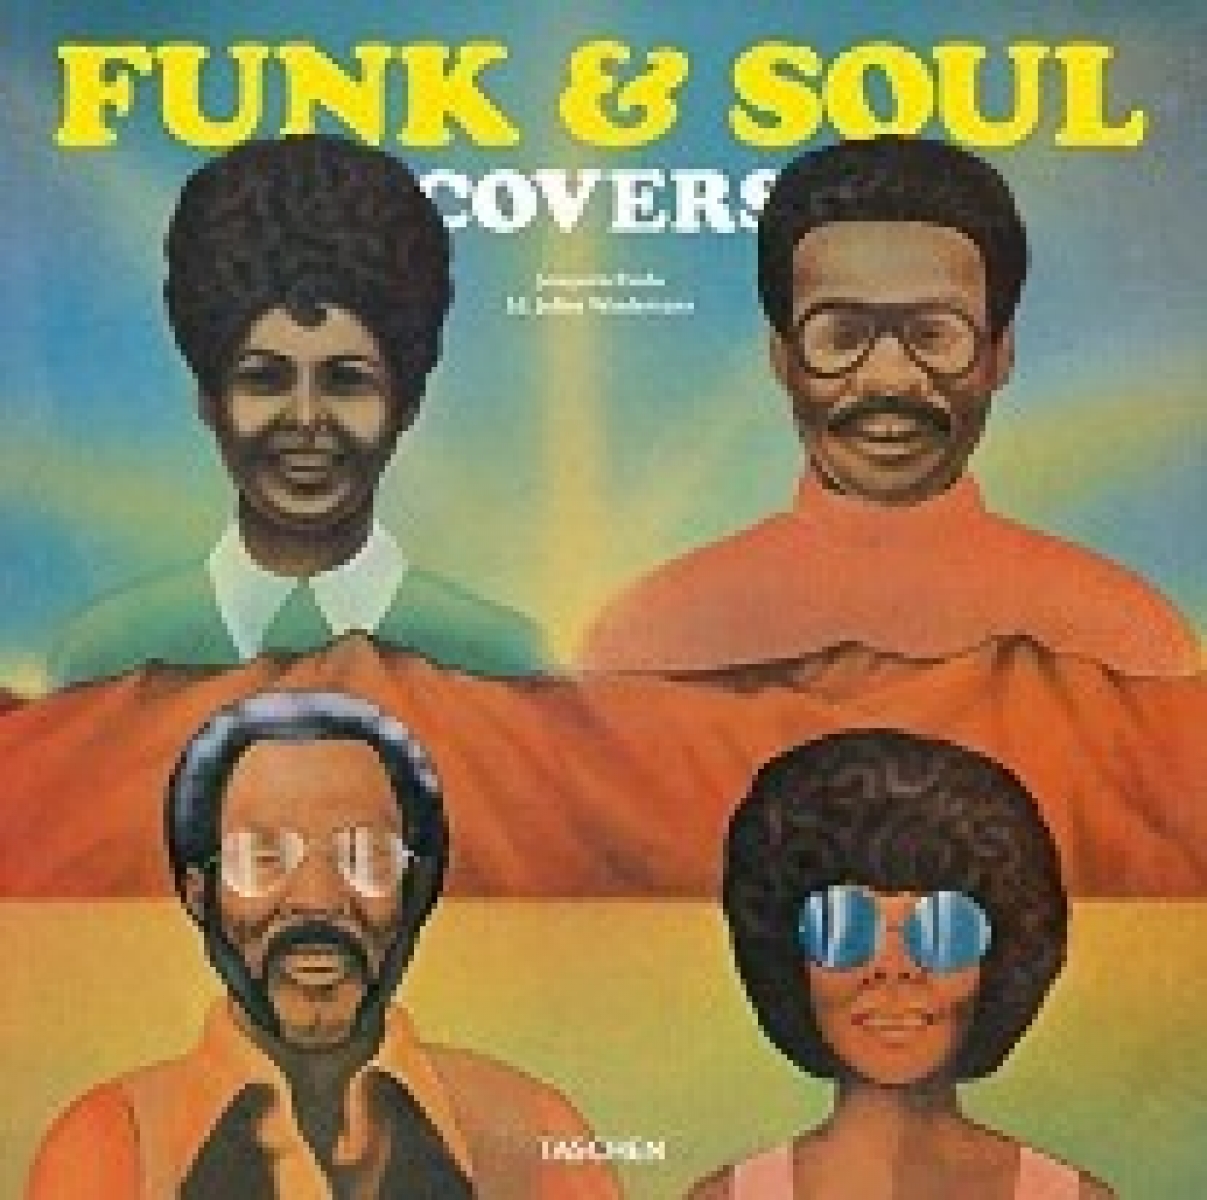 Paulo, Joaquim Funk & soul covers 